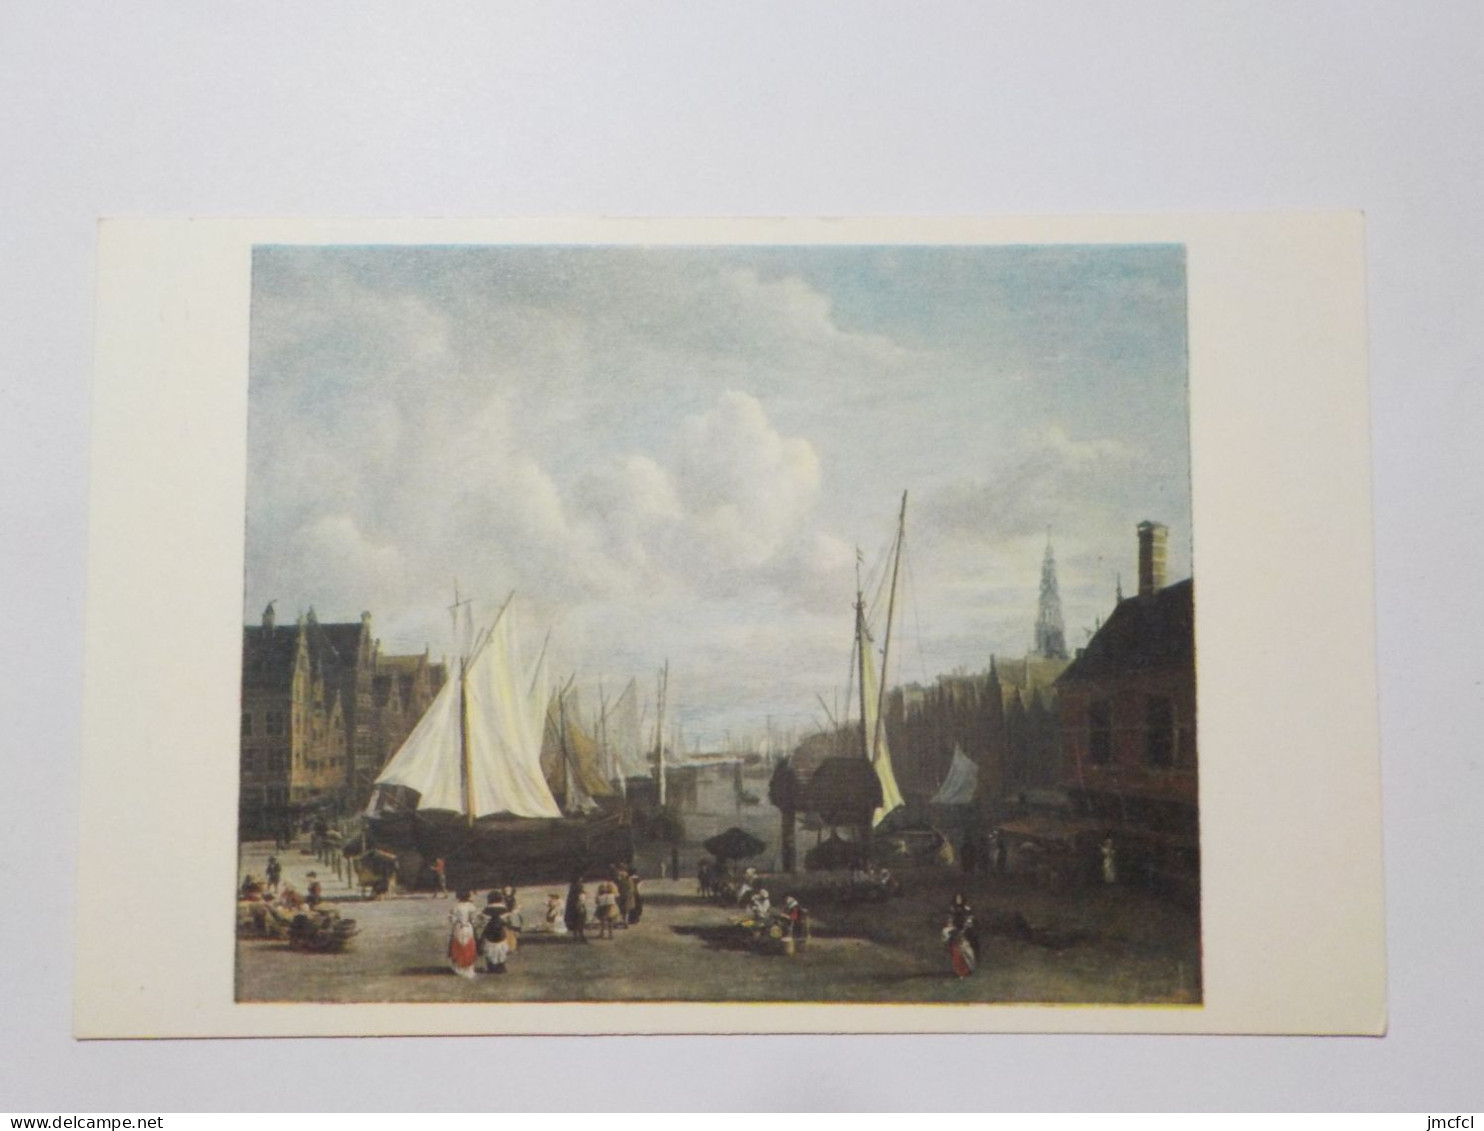 THE FRICK COLLECTION  "  Quay At Amsterdam"   Jacob Van Ruisdael - Museos